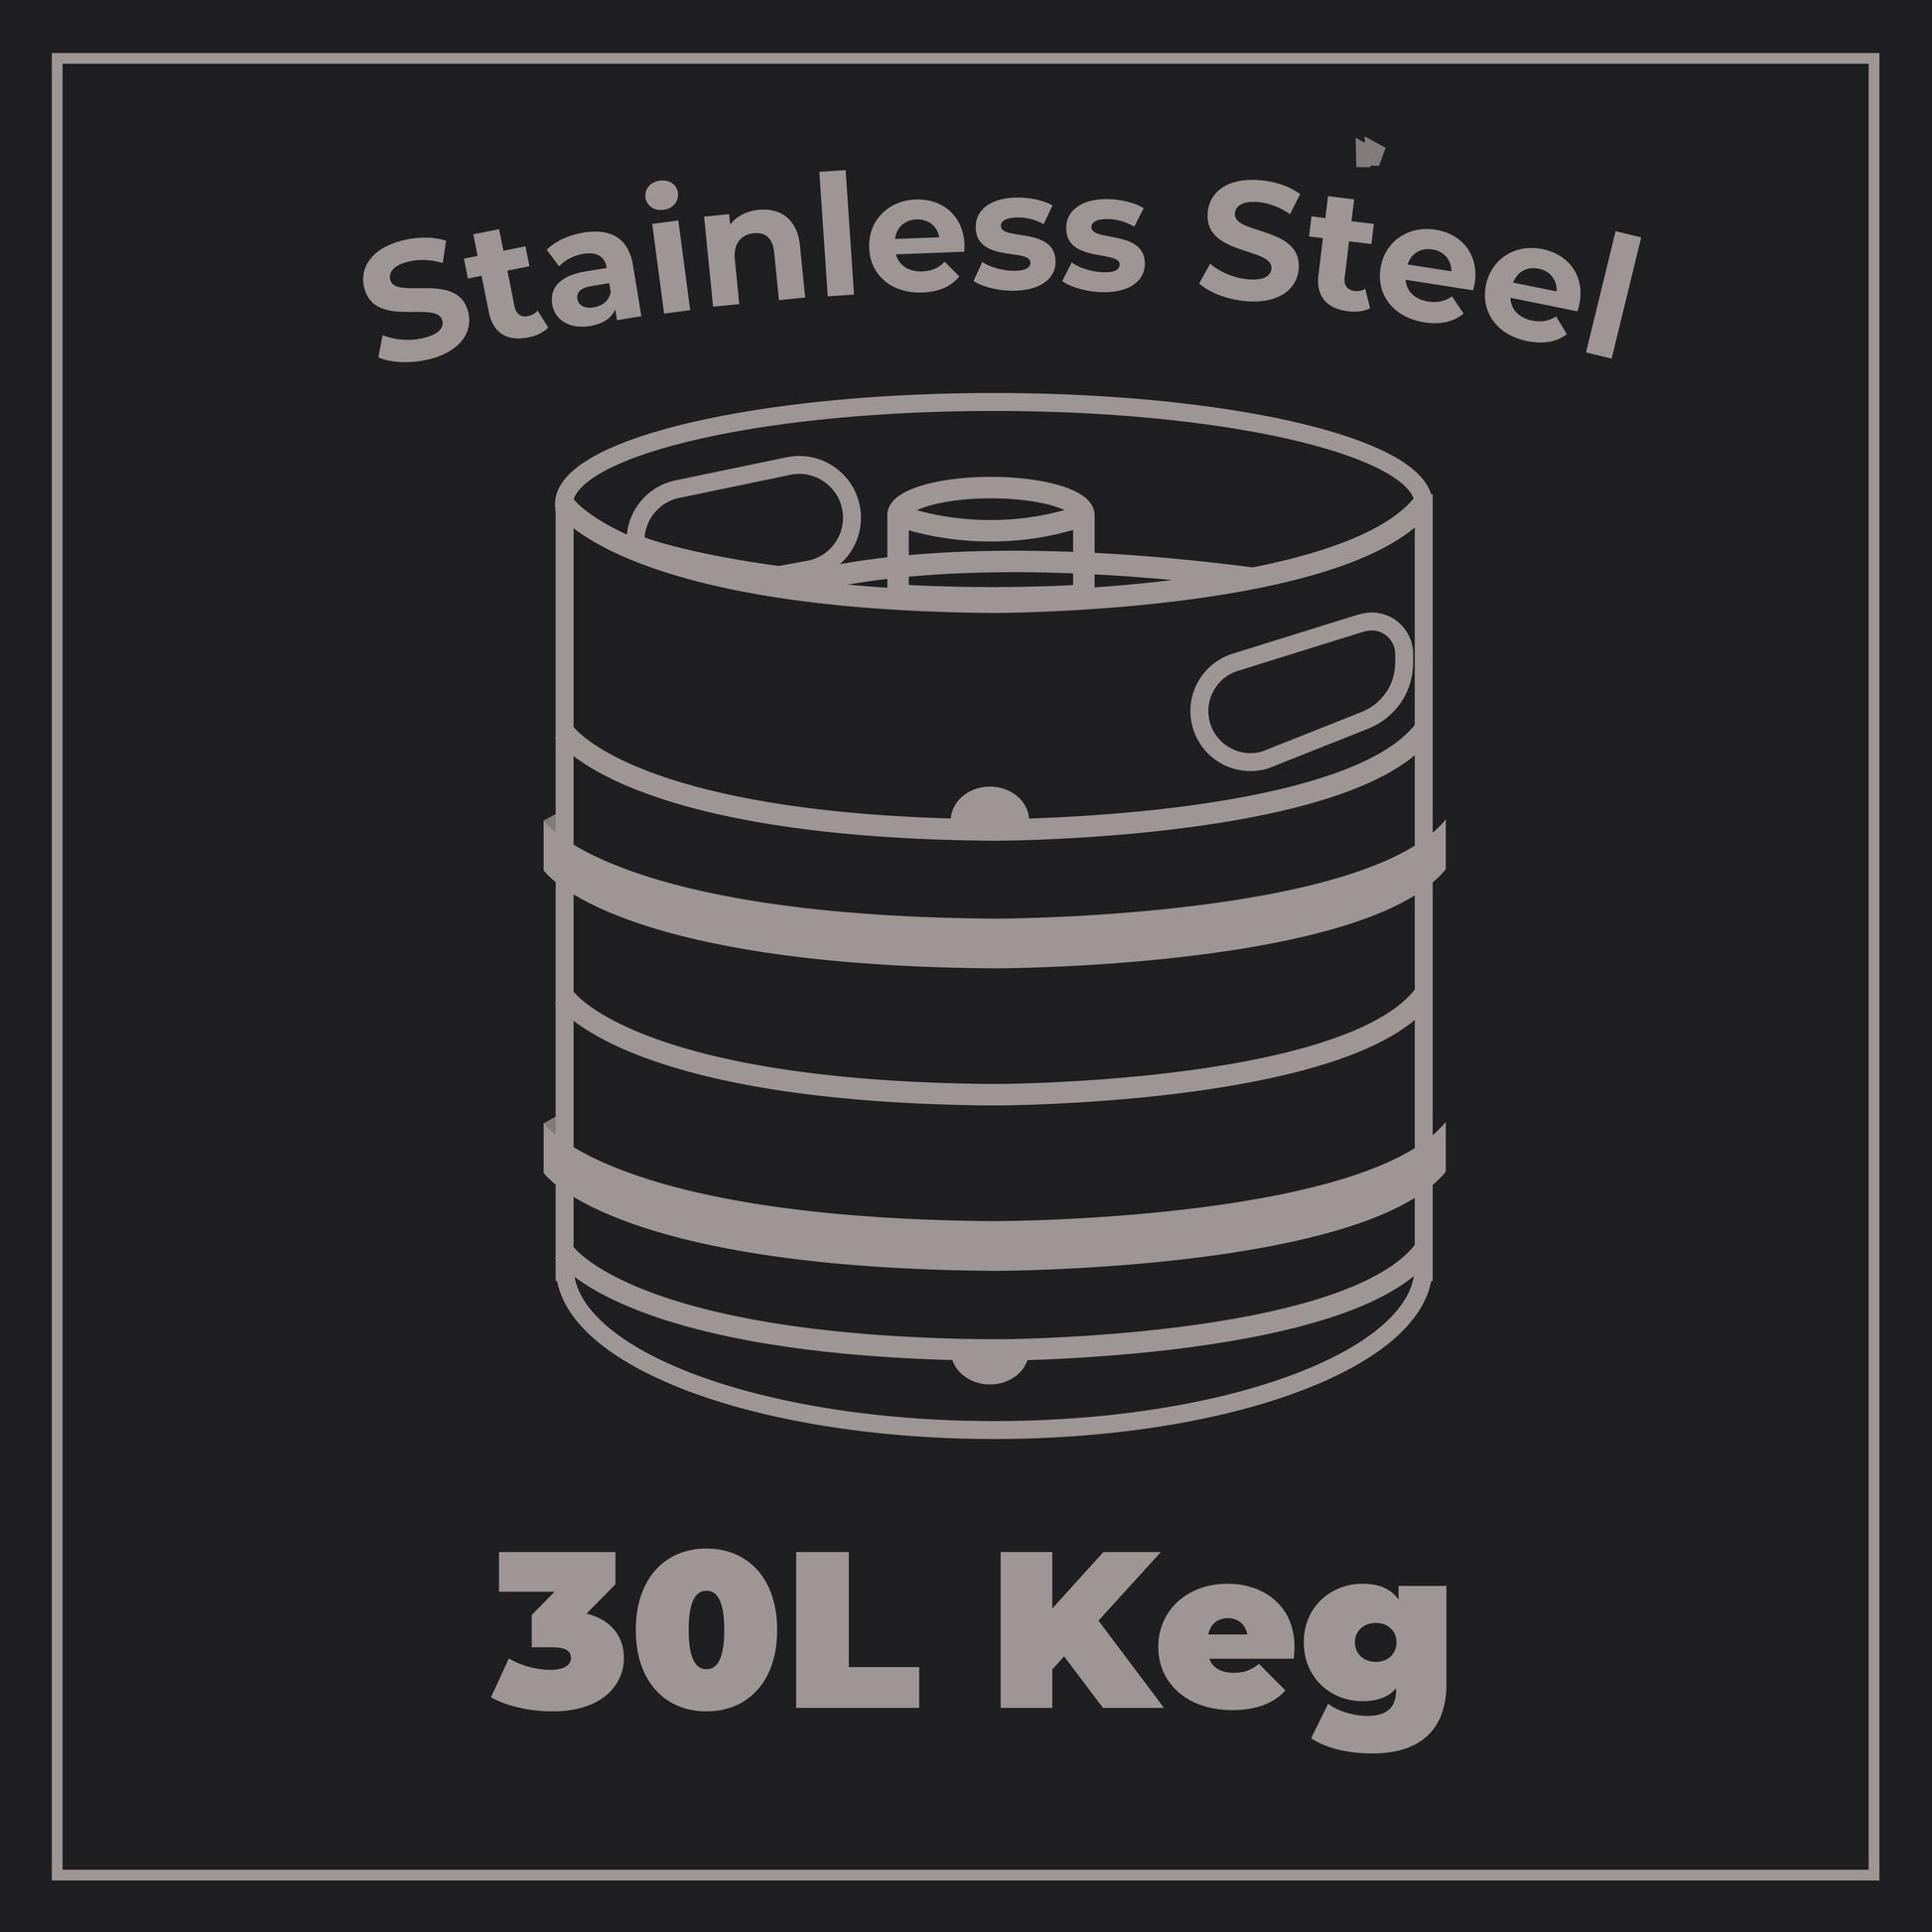 Budejovicky Budvar - Lager - 5.0% ABV - 30L Keg(53 Pints) - Stainless Steel Keg